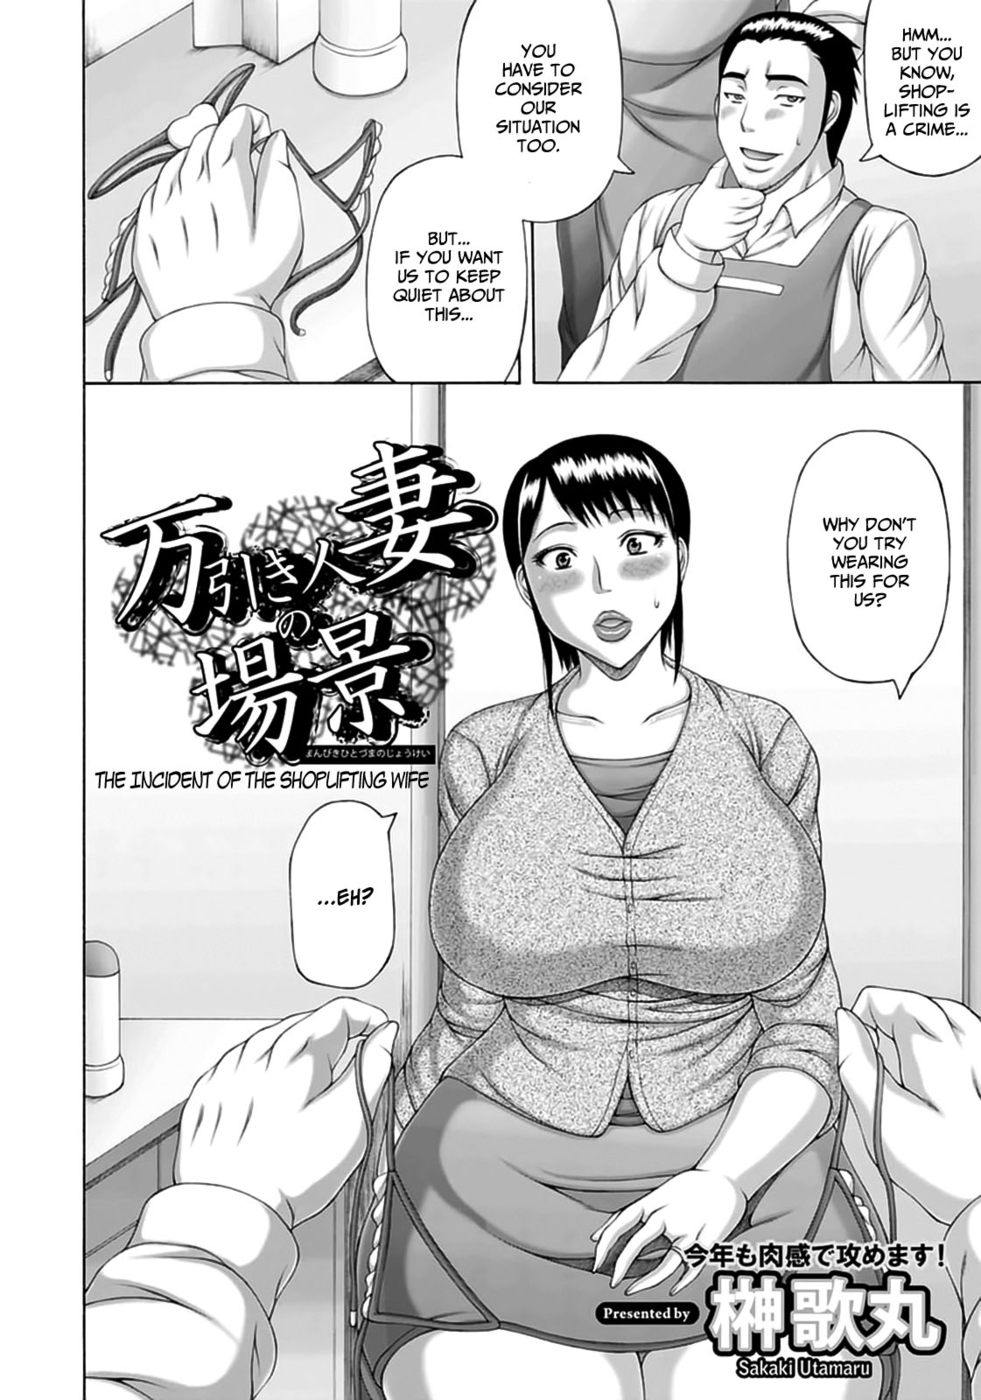 Hentai Manga Comic-The Incident of the Shoplifting Wife-Read-2